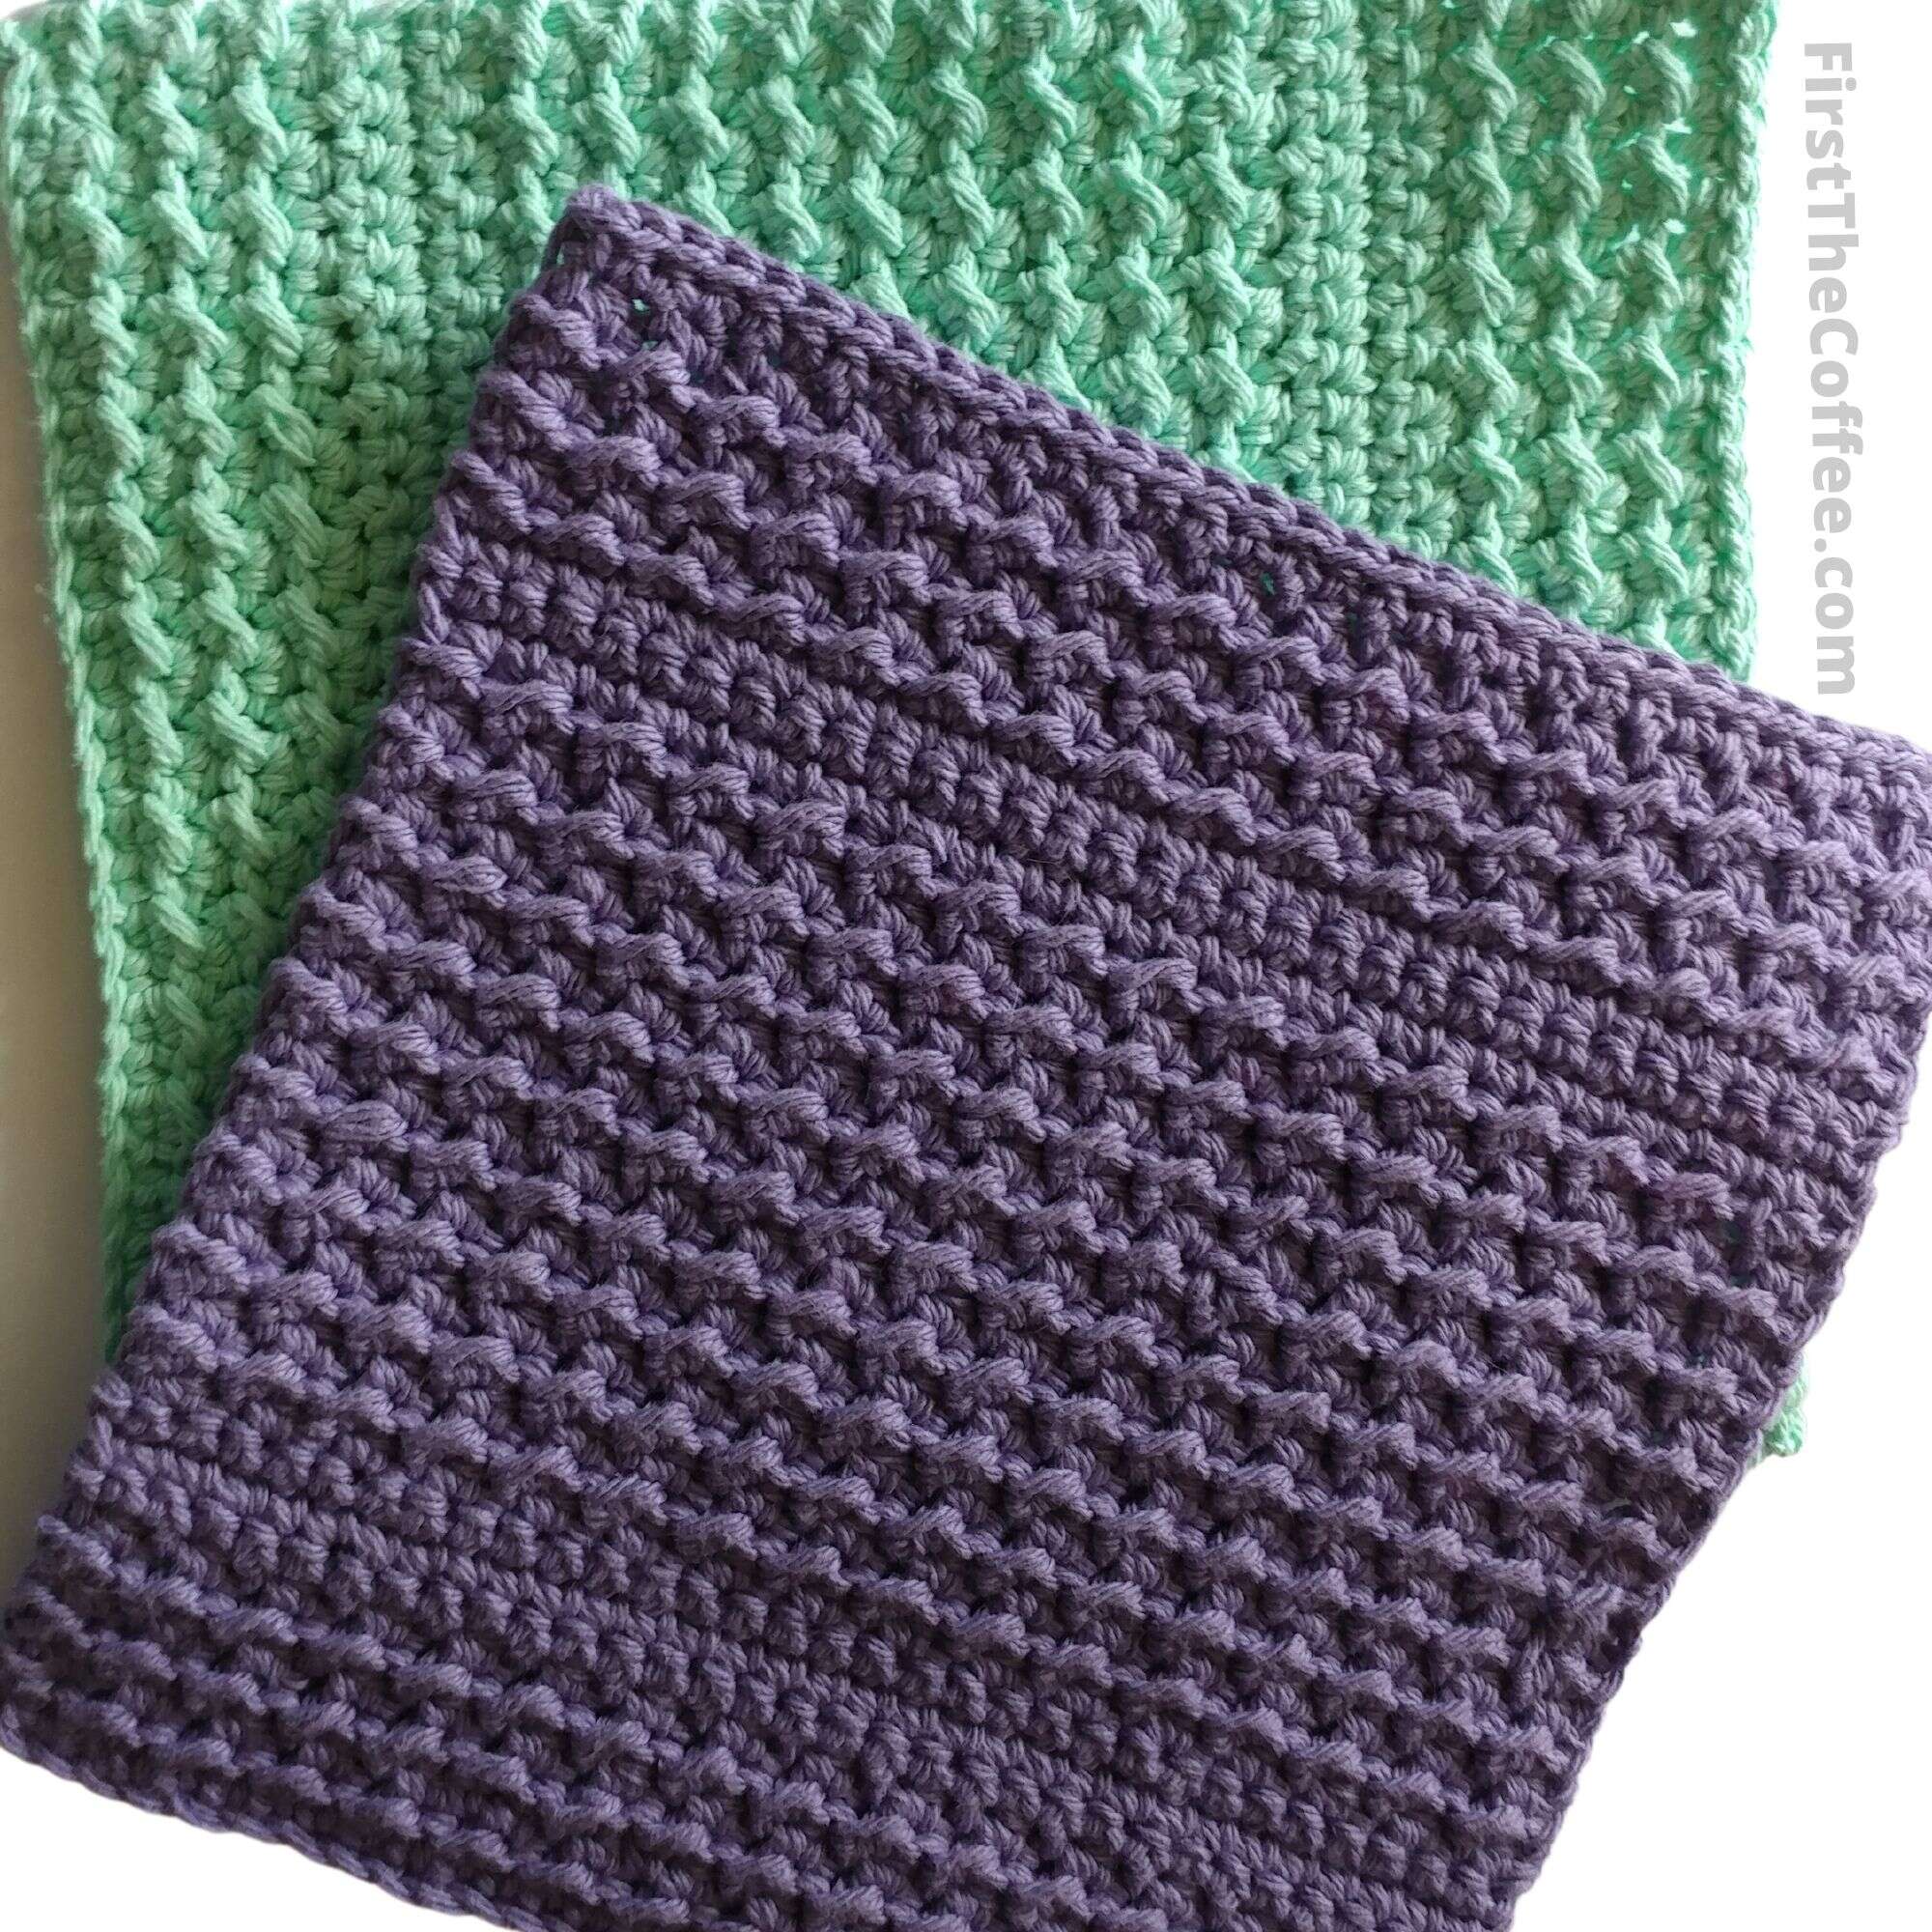 50 Free and Easy Crochet Dishcloth Patterns - Stitch11